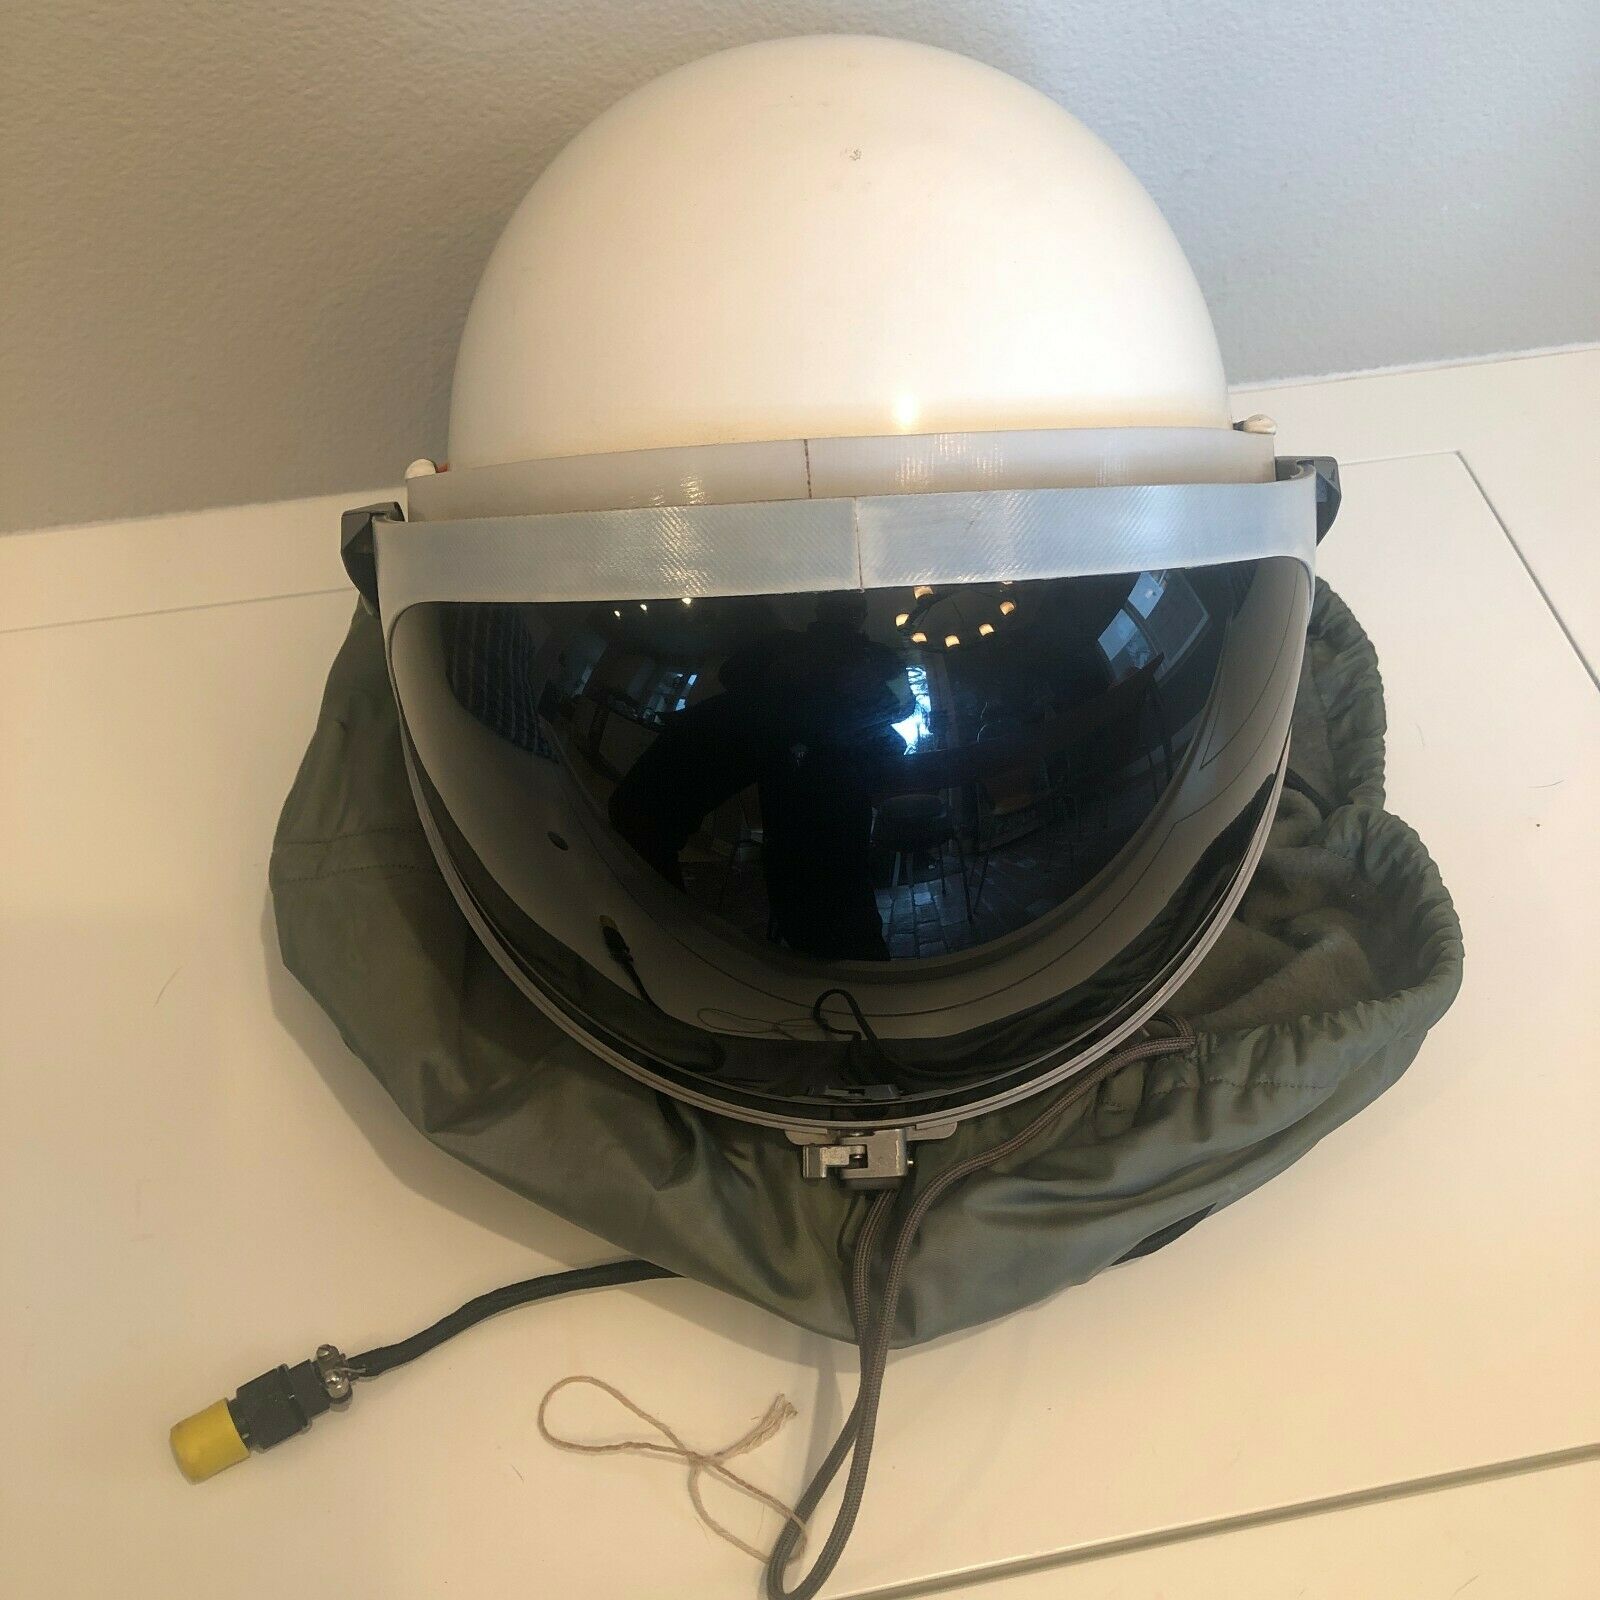 Original SR-71 Blackbird Pilot Helmet available on eBay for US $17,995.00